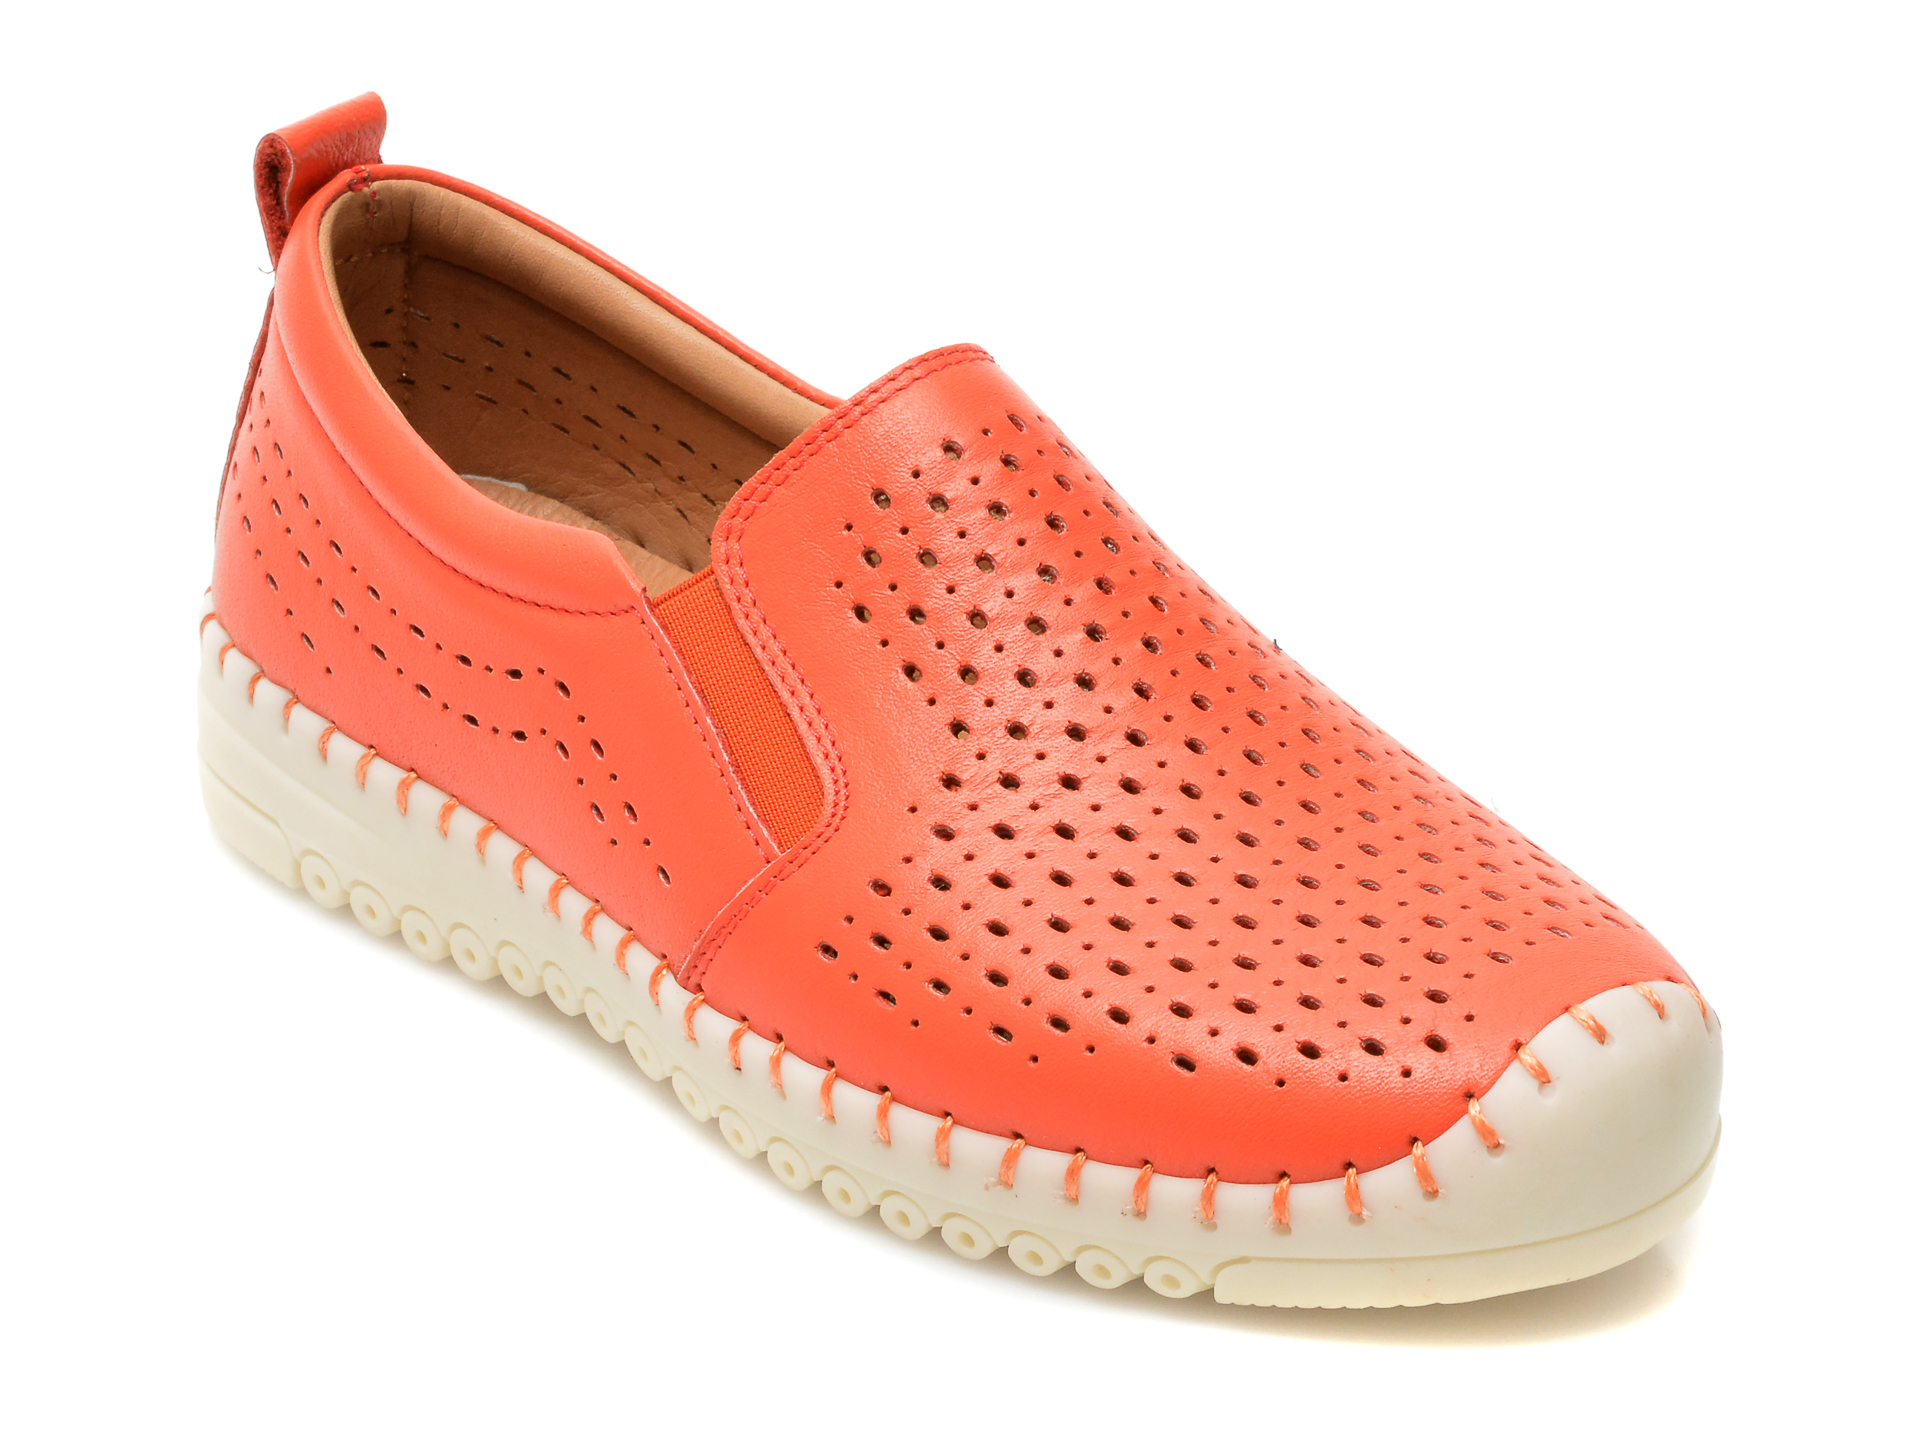 Pantofi sport EPICA multicolori, QN218, din material textil si piele naturala Epica